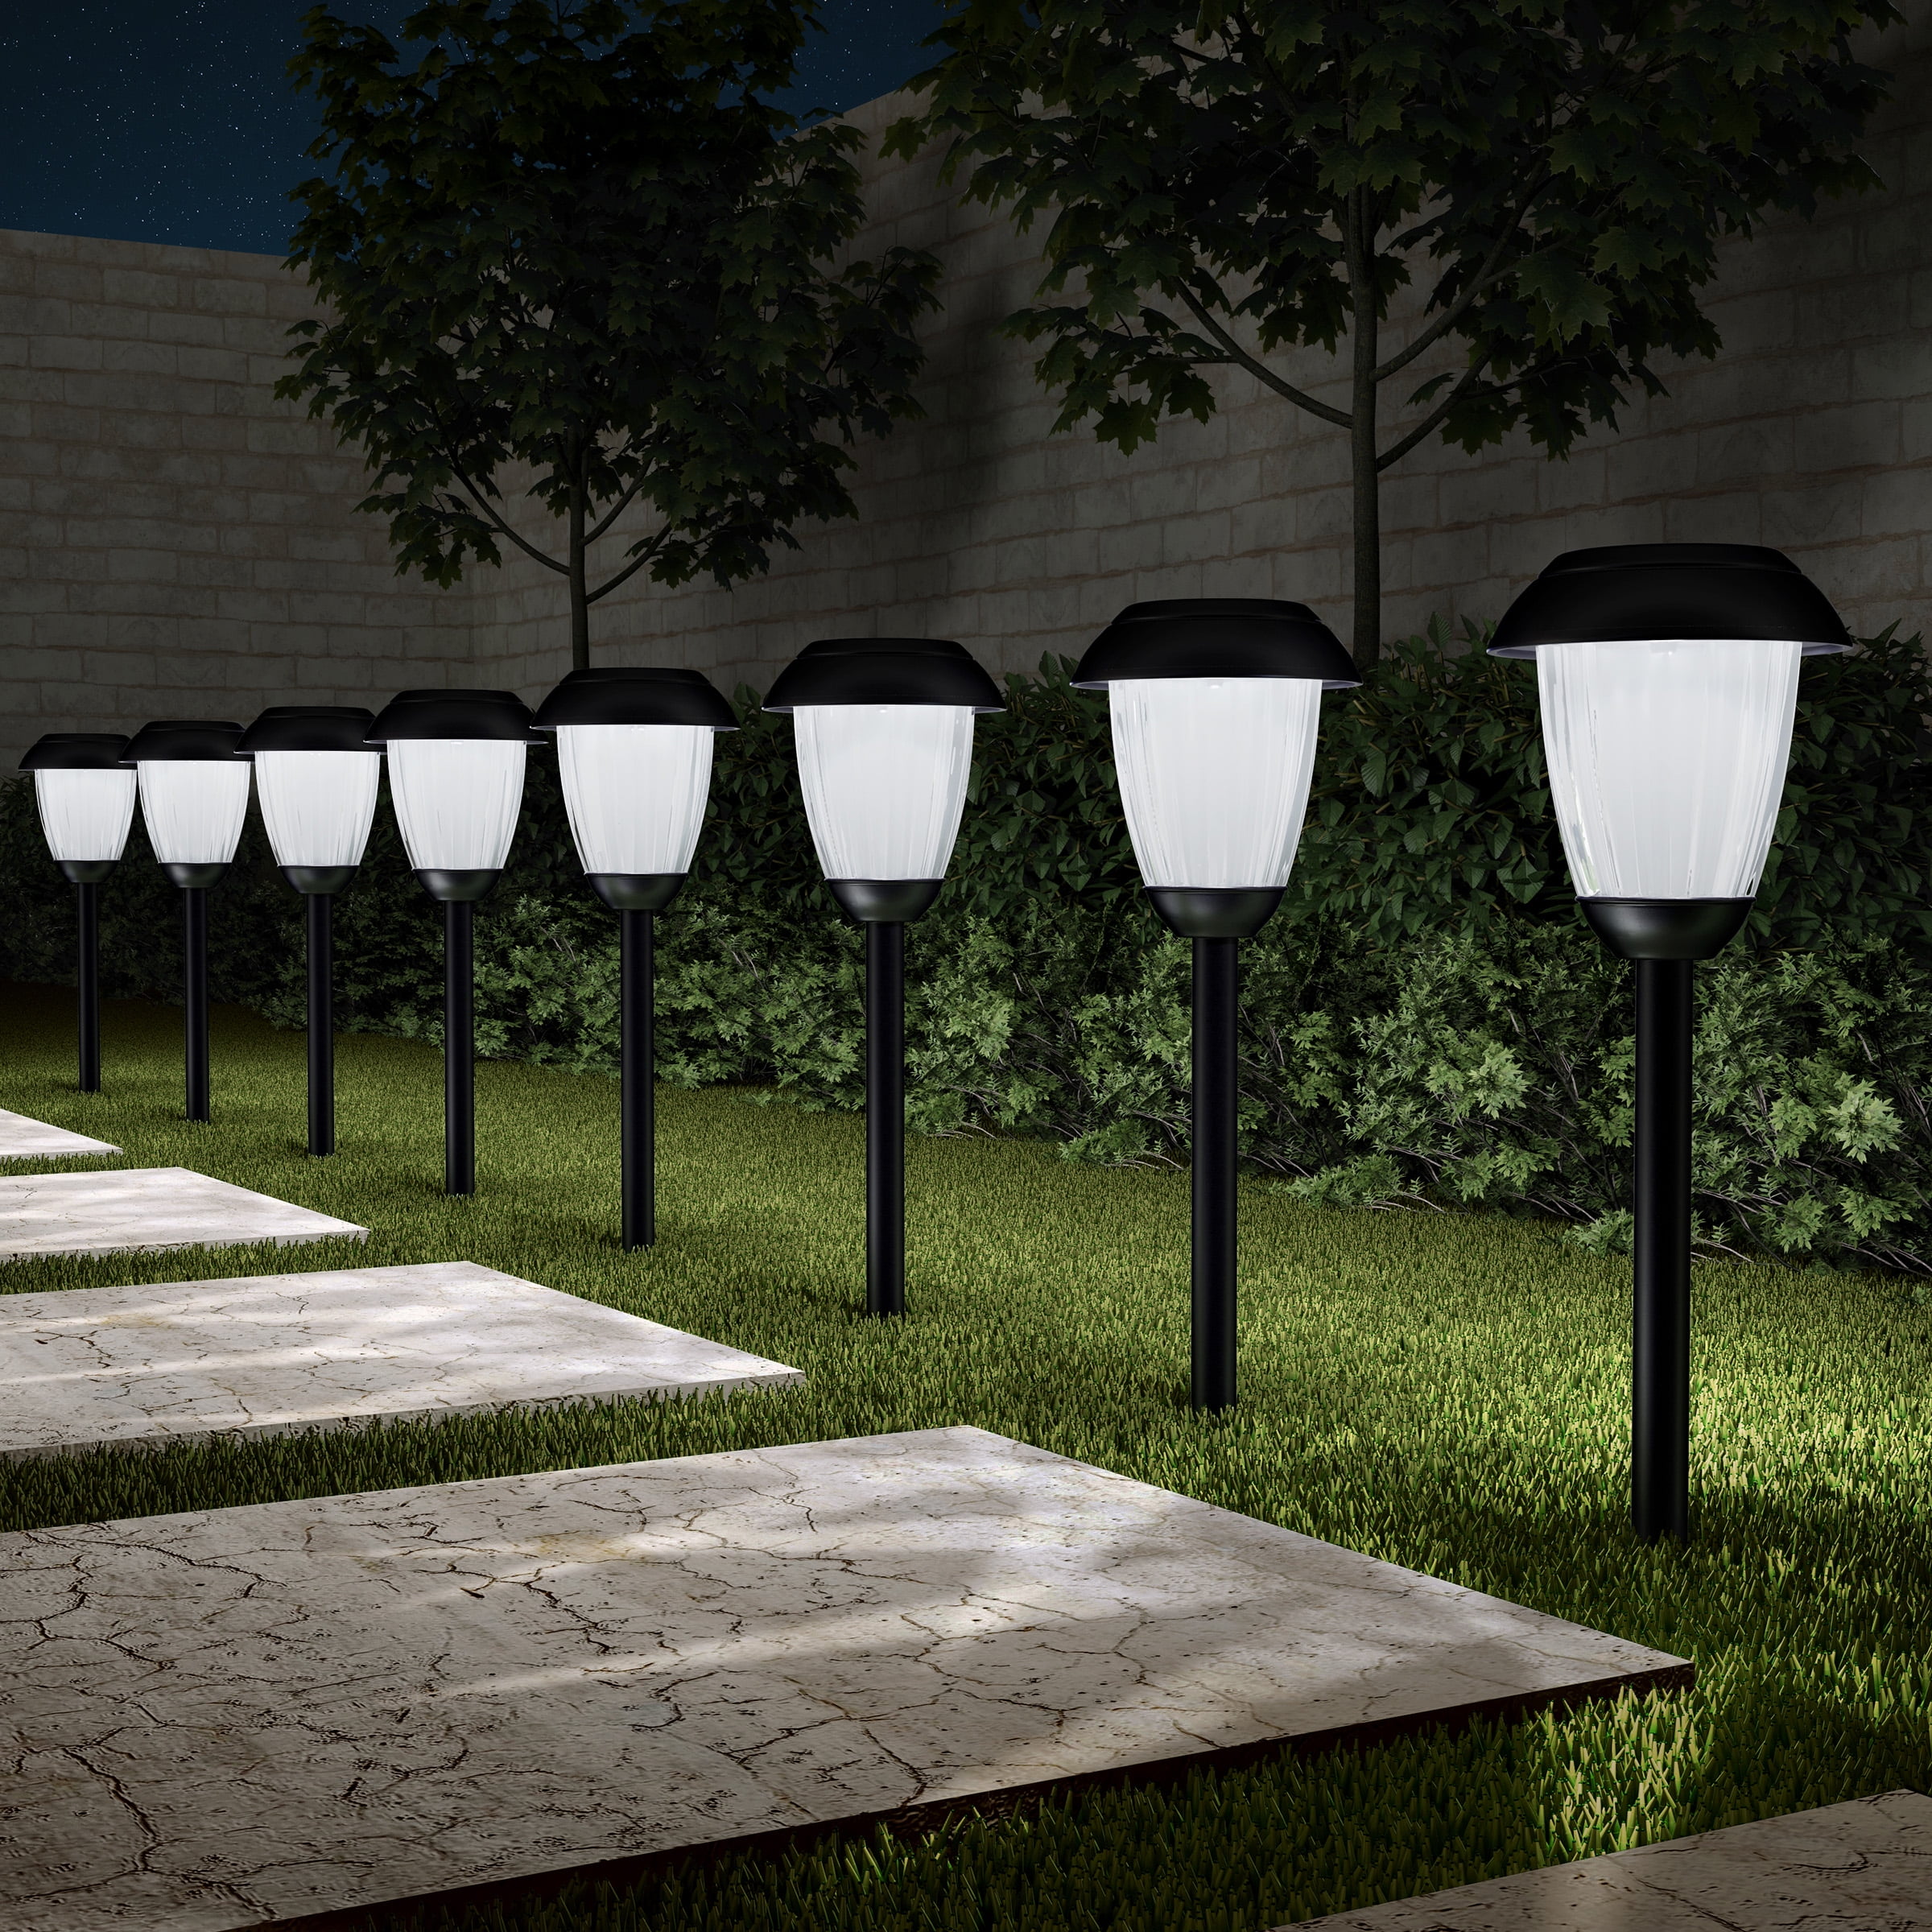 2pcs Outdoor Garden Stainless Steel LED Solar Landscape Path Lights Yard Lamp